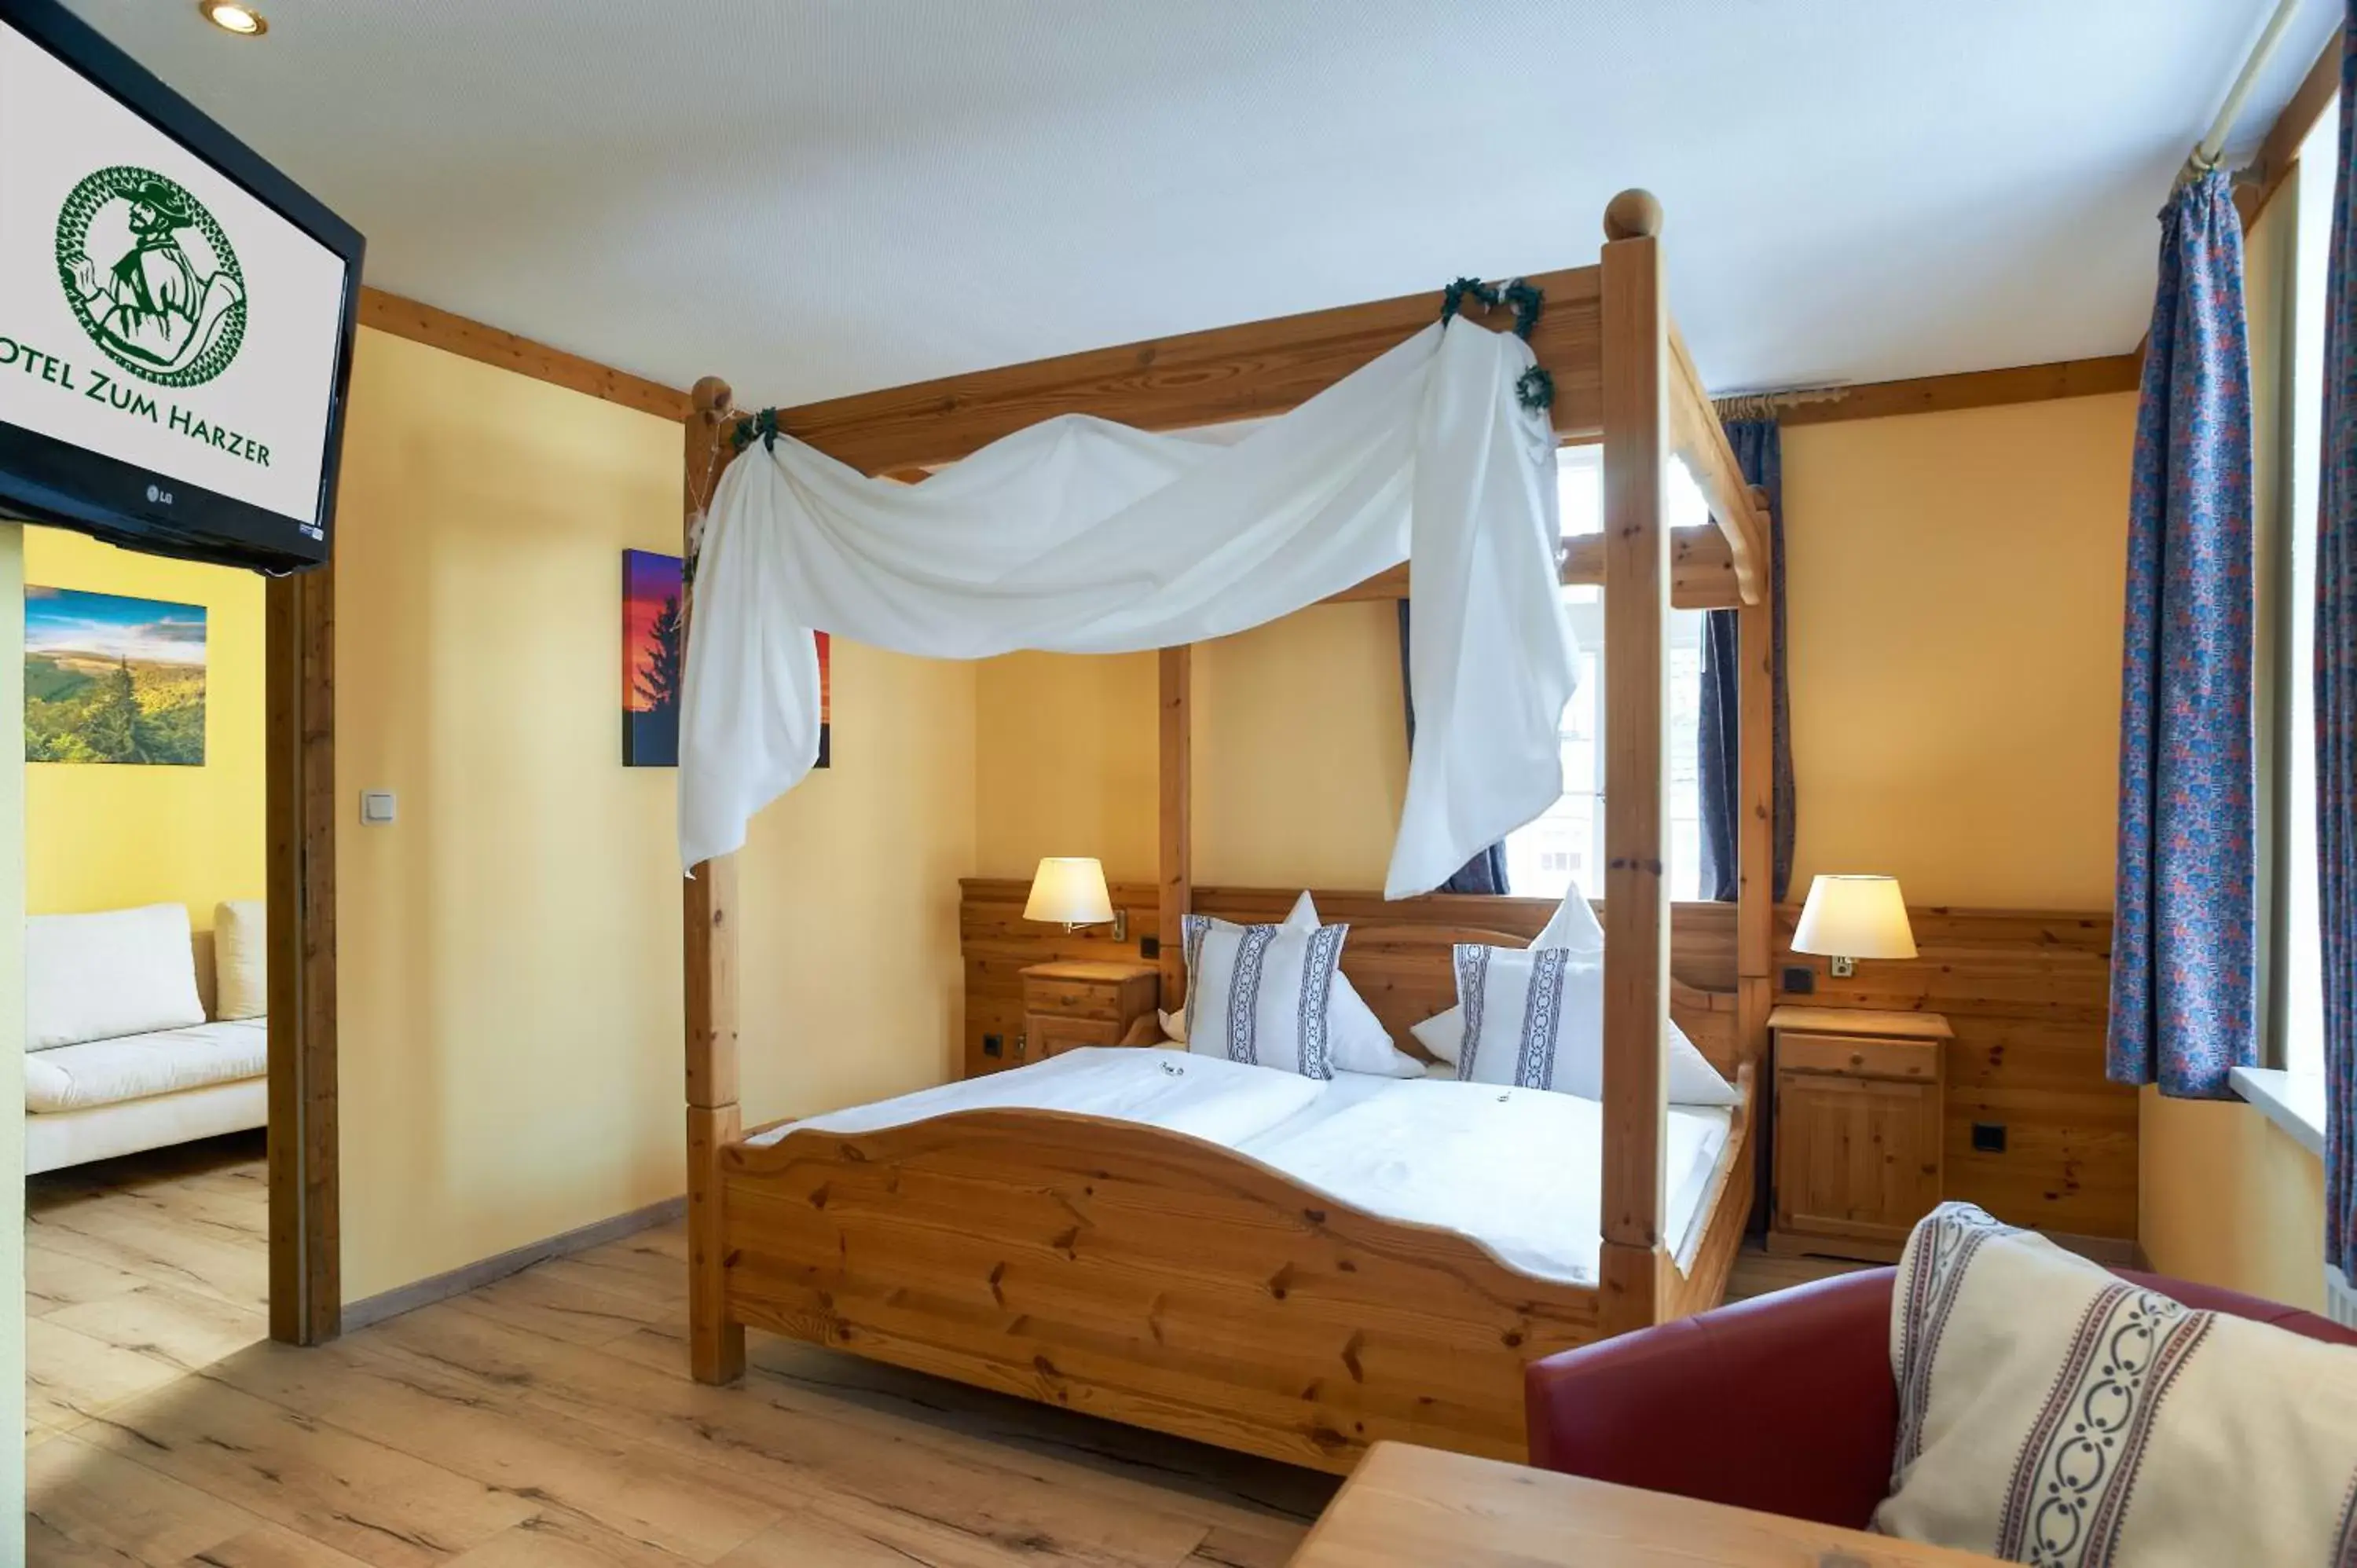 Bedroom in Hotel Zum Harzer